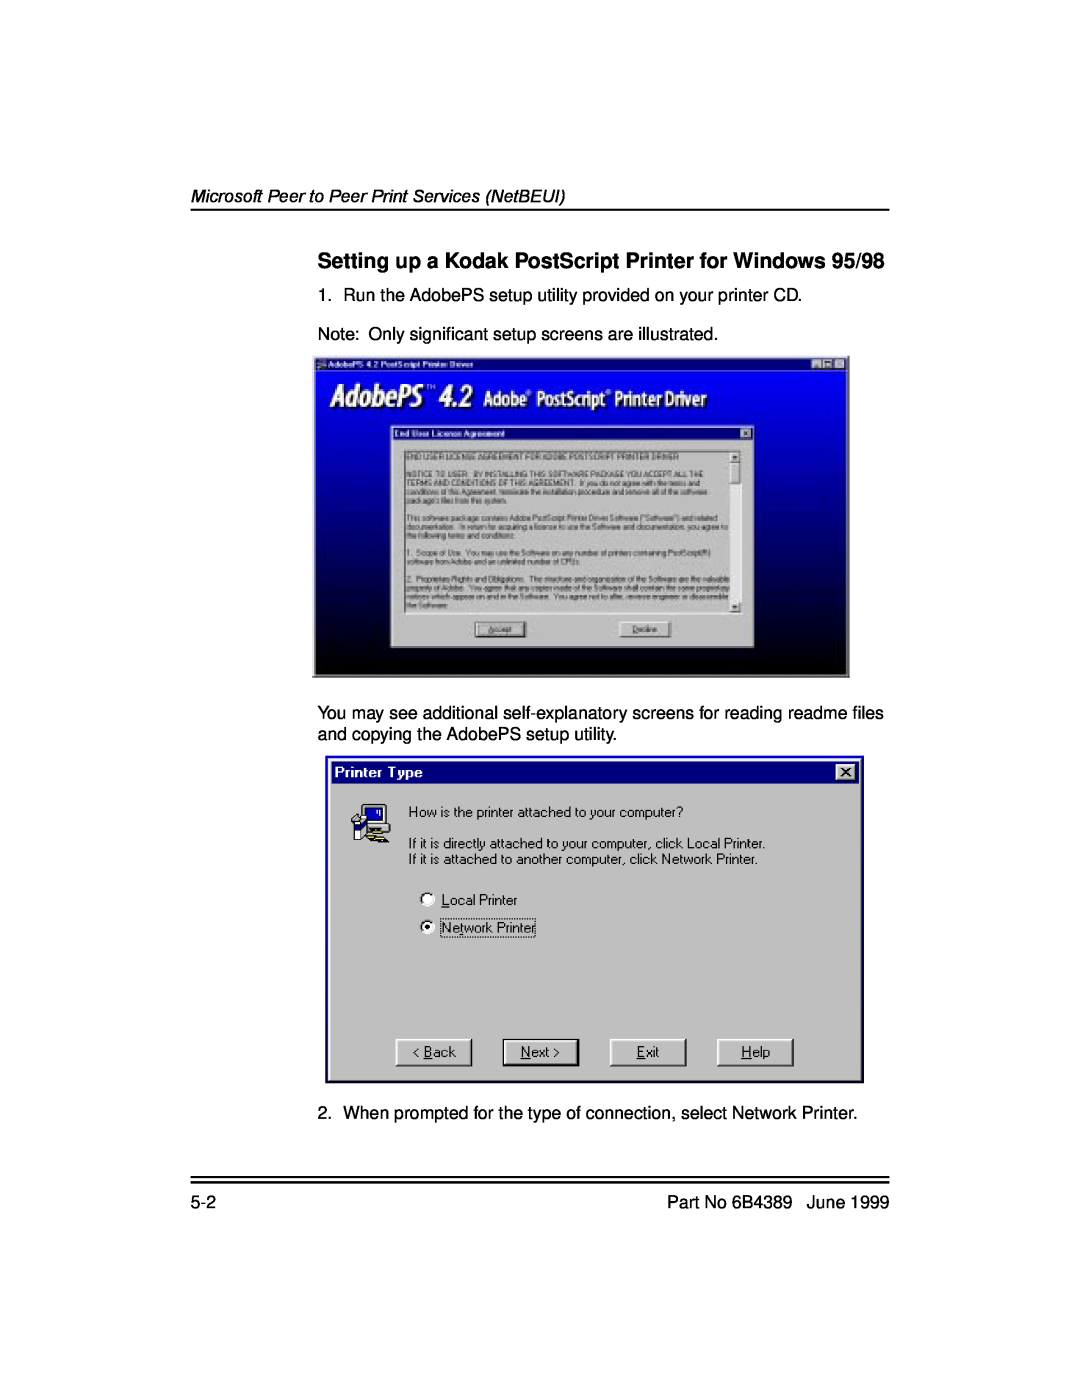 Kodak 8670, 8660 Setting up a Kodak PostScript Printer for Windows 95/98, Microsoft Peer to Peer Print Services NetBEUI 